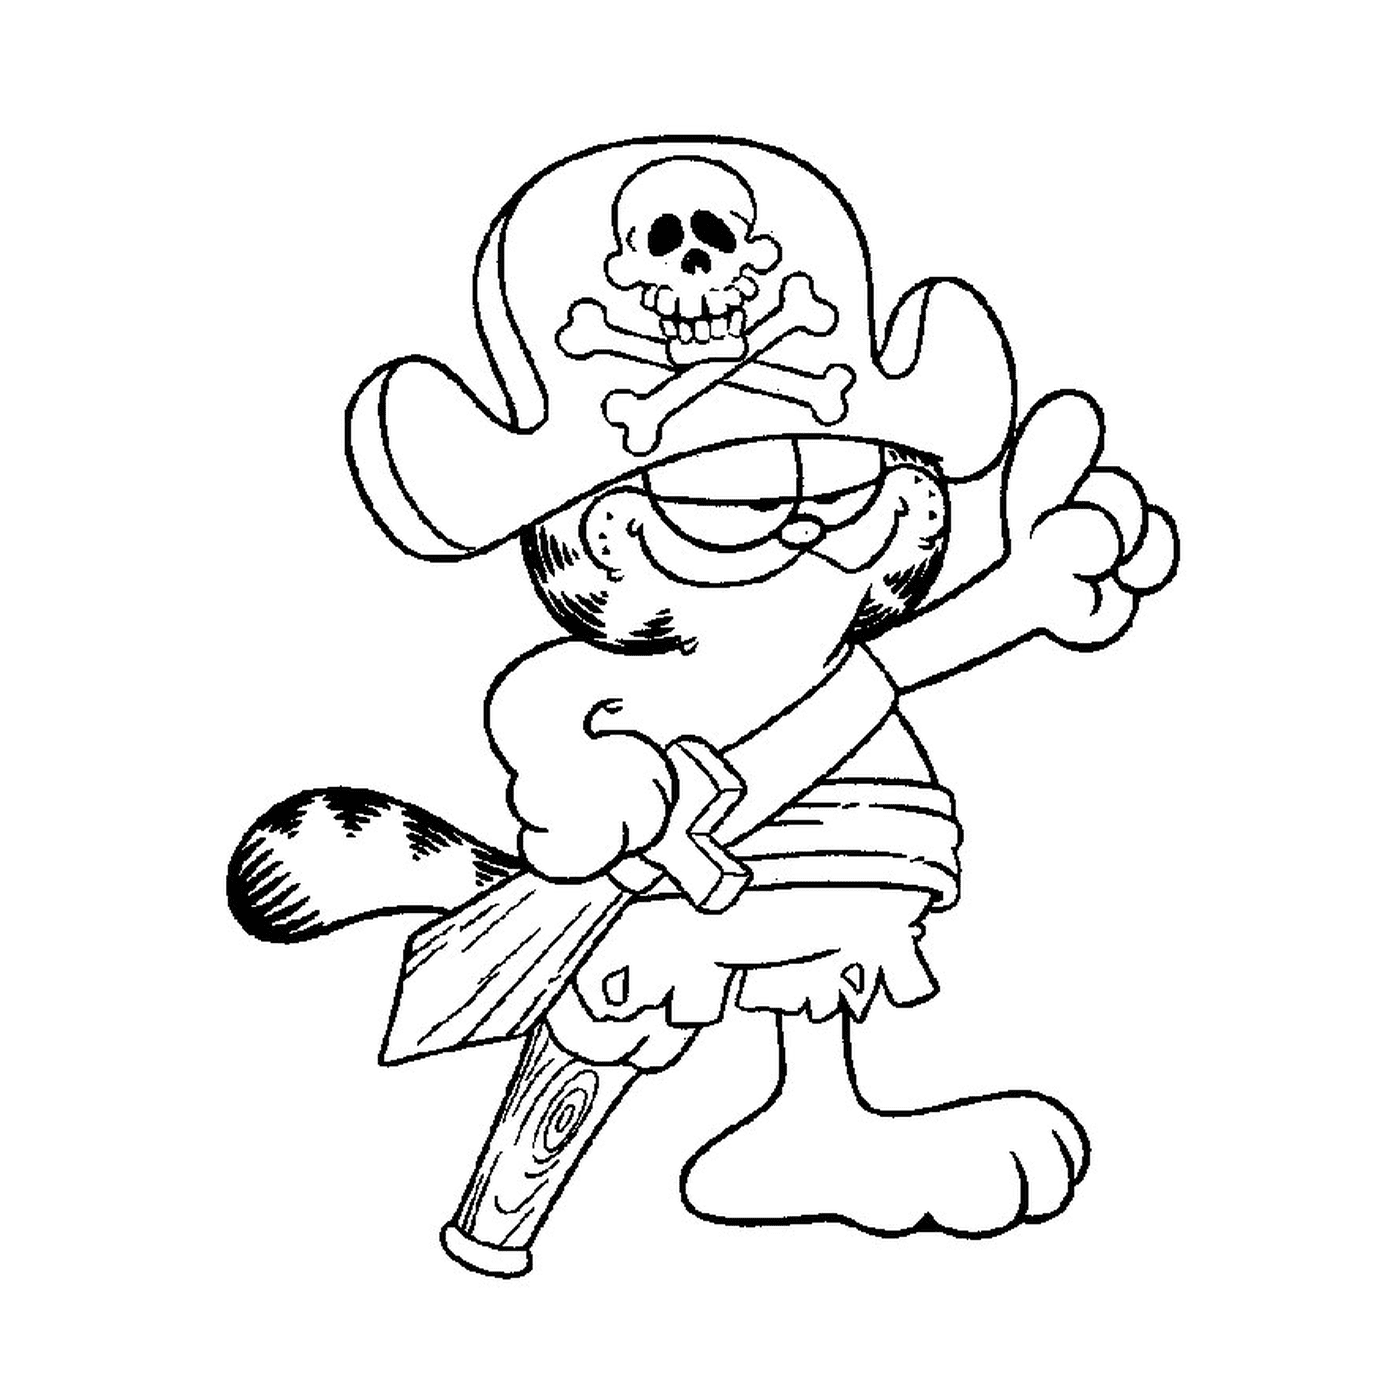  Garfield in pirate version 